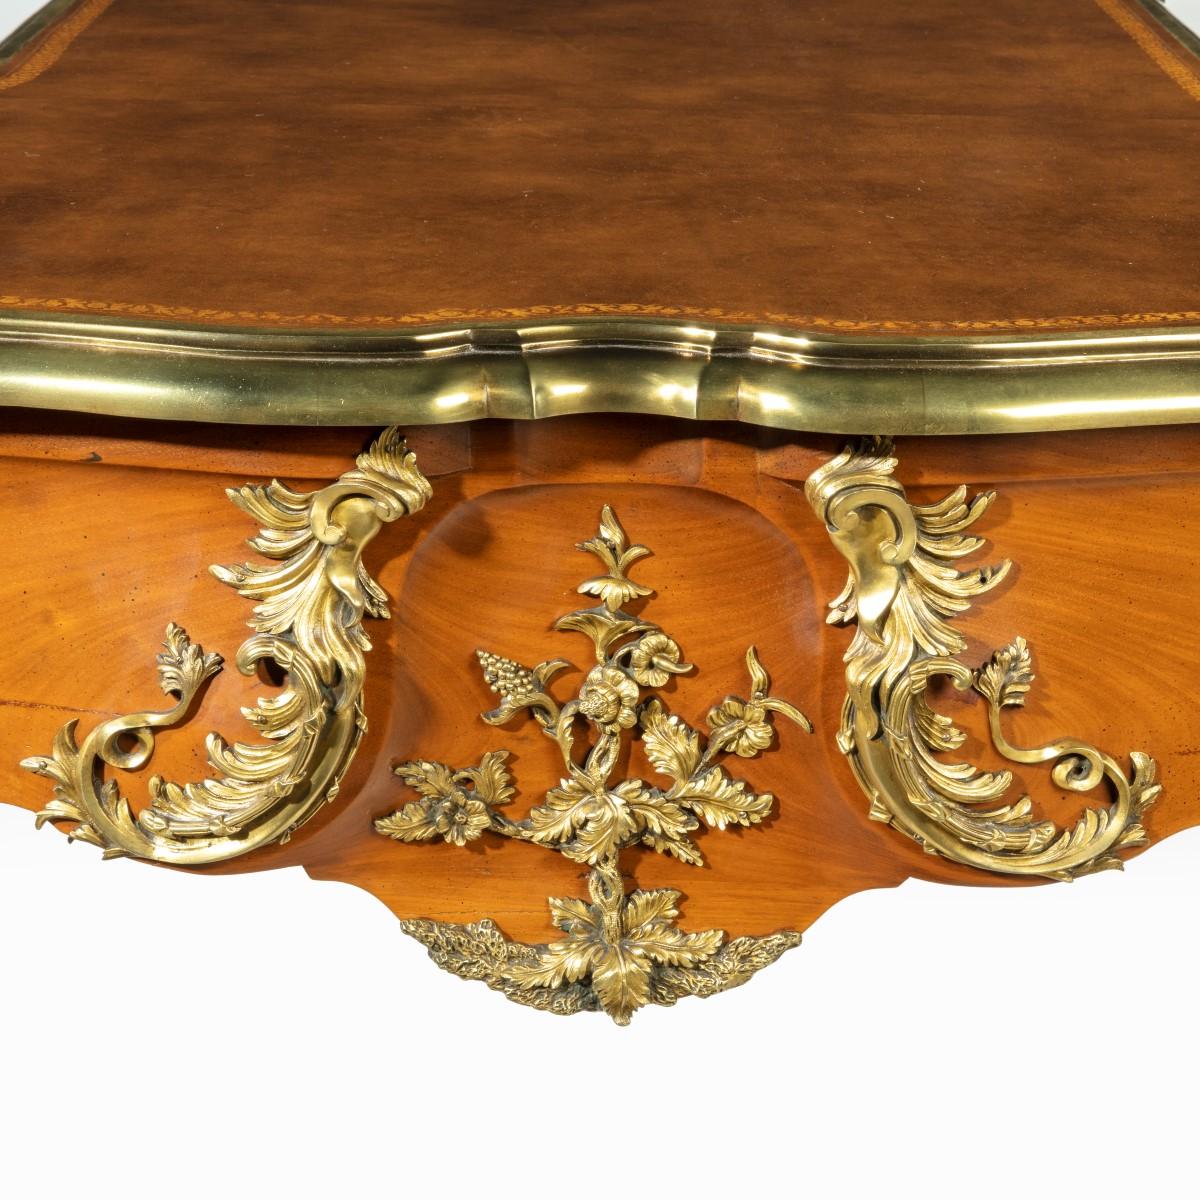 Outstanding Louis XV-Style Mahogany Bureau Plat For Sale 7